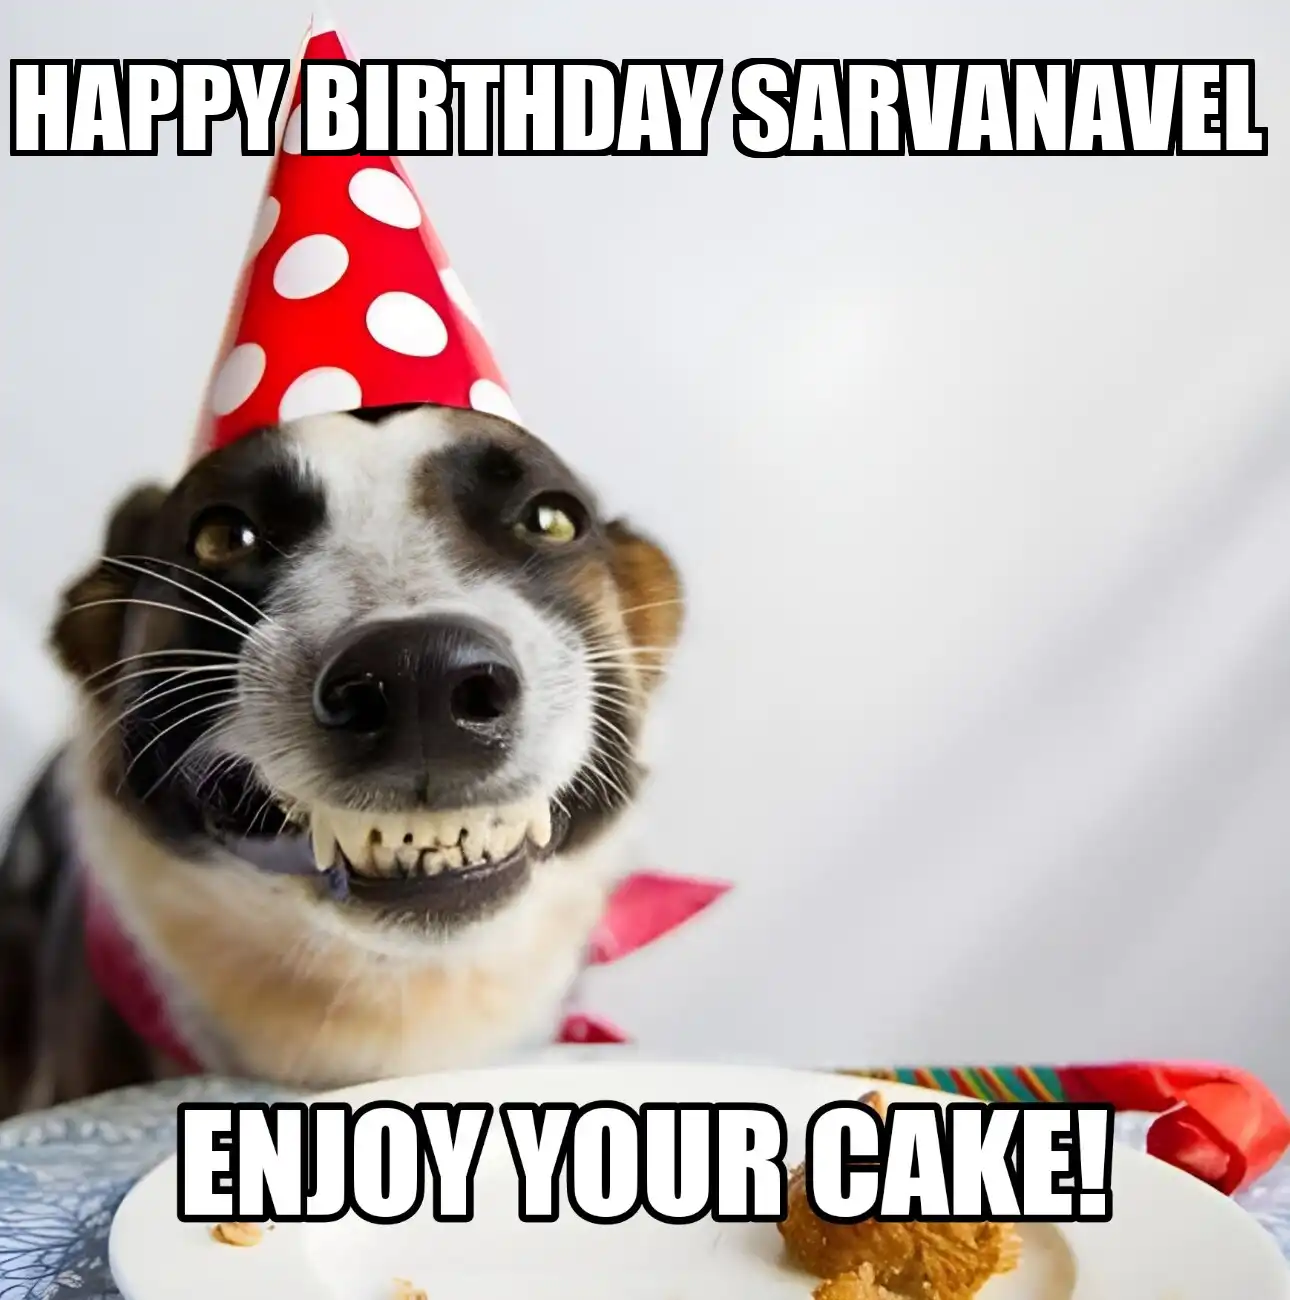 Happy Birthday Sarvanavel Enjoy Your Cake Dog Meme